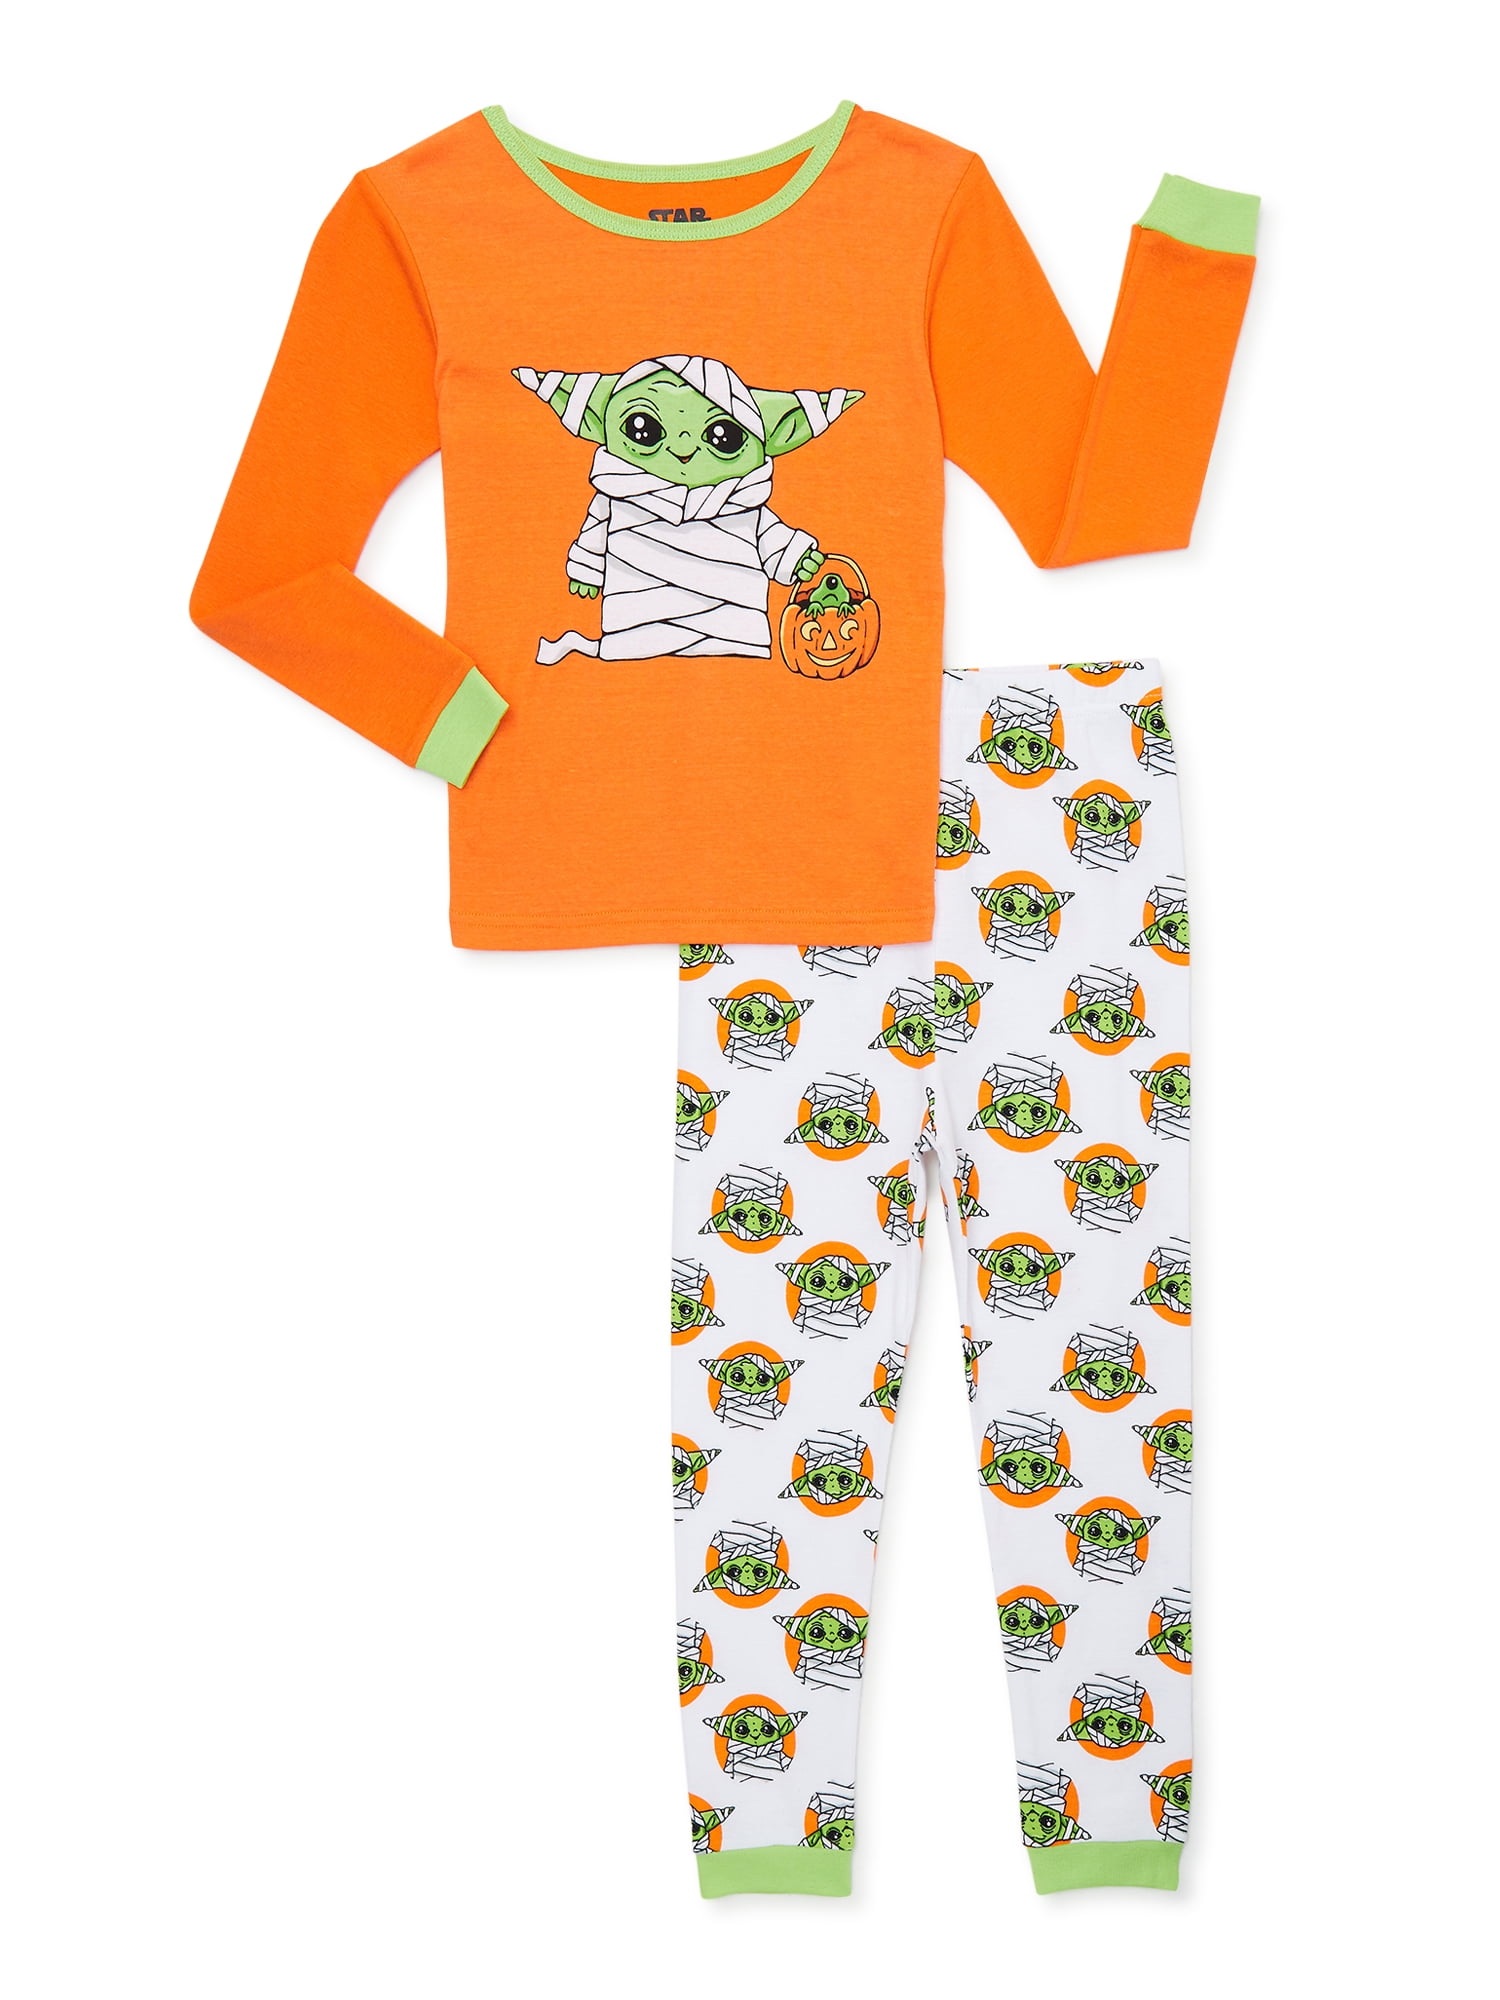 Pajamas for Boys Kid Clothes Halloween PJs Long Sleeve 4-Piece Sets Sleepwear 2-8 Years 